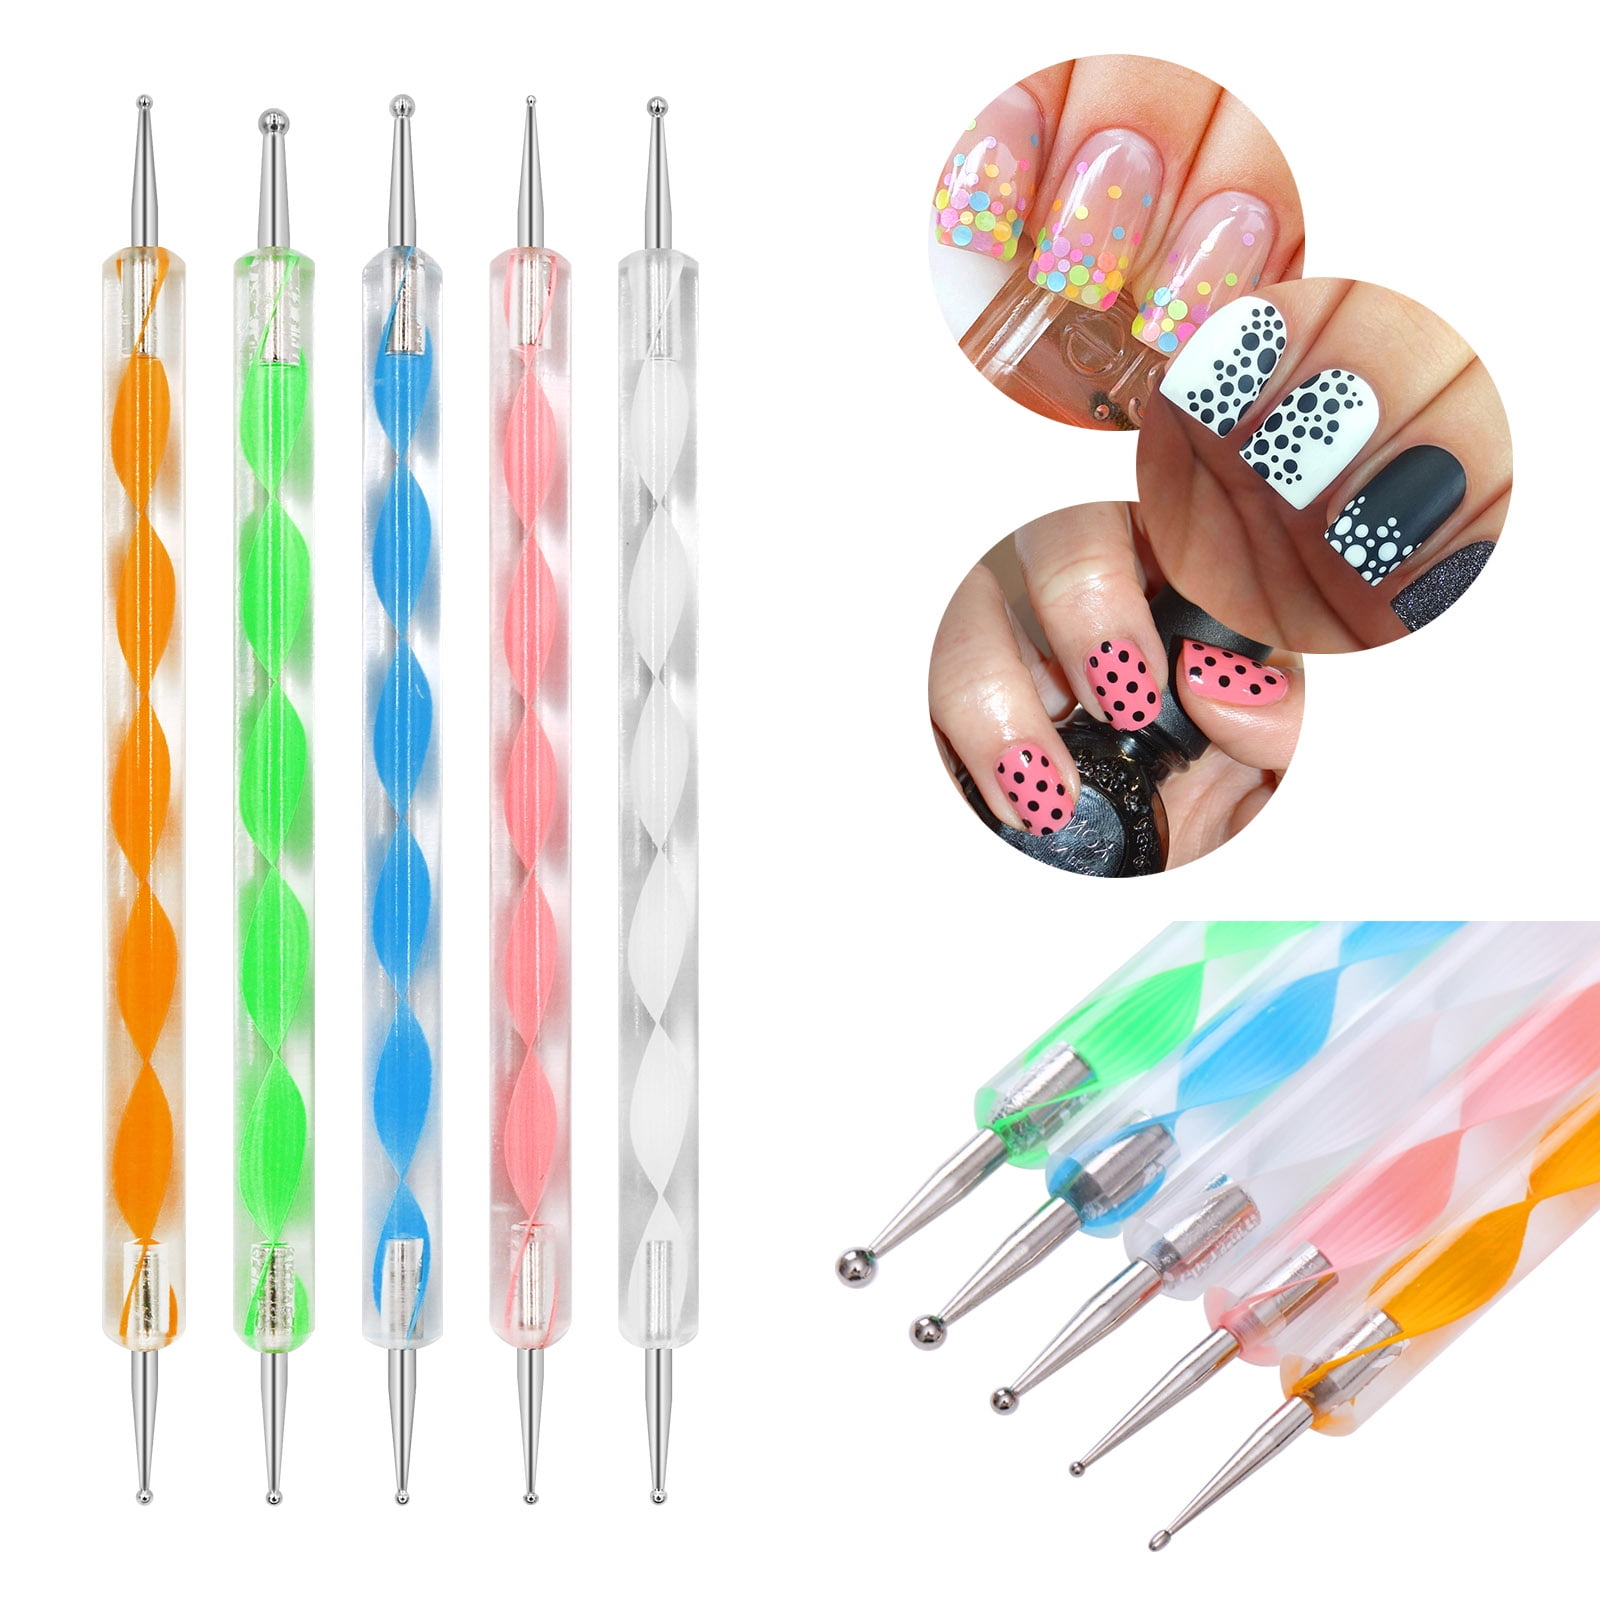 Pinkiou Nail Art Brushes Kit Pen Designer Stamp Tools for Nails Decorations, Pink, Adult Unisex, Size: Large